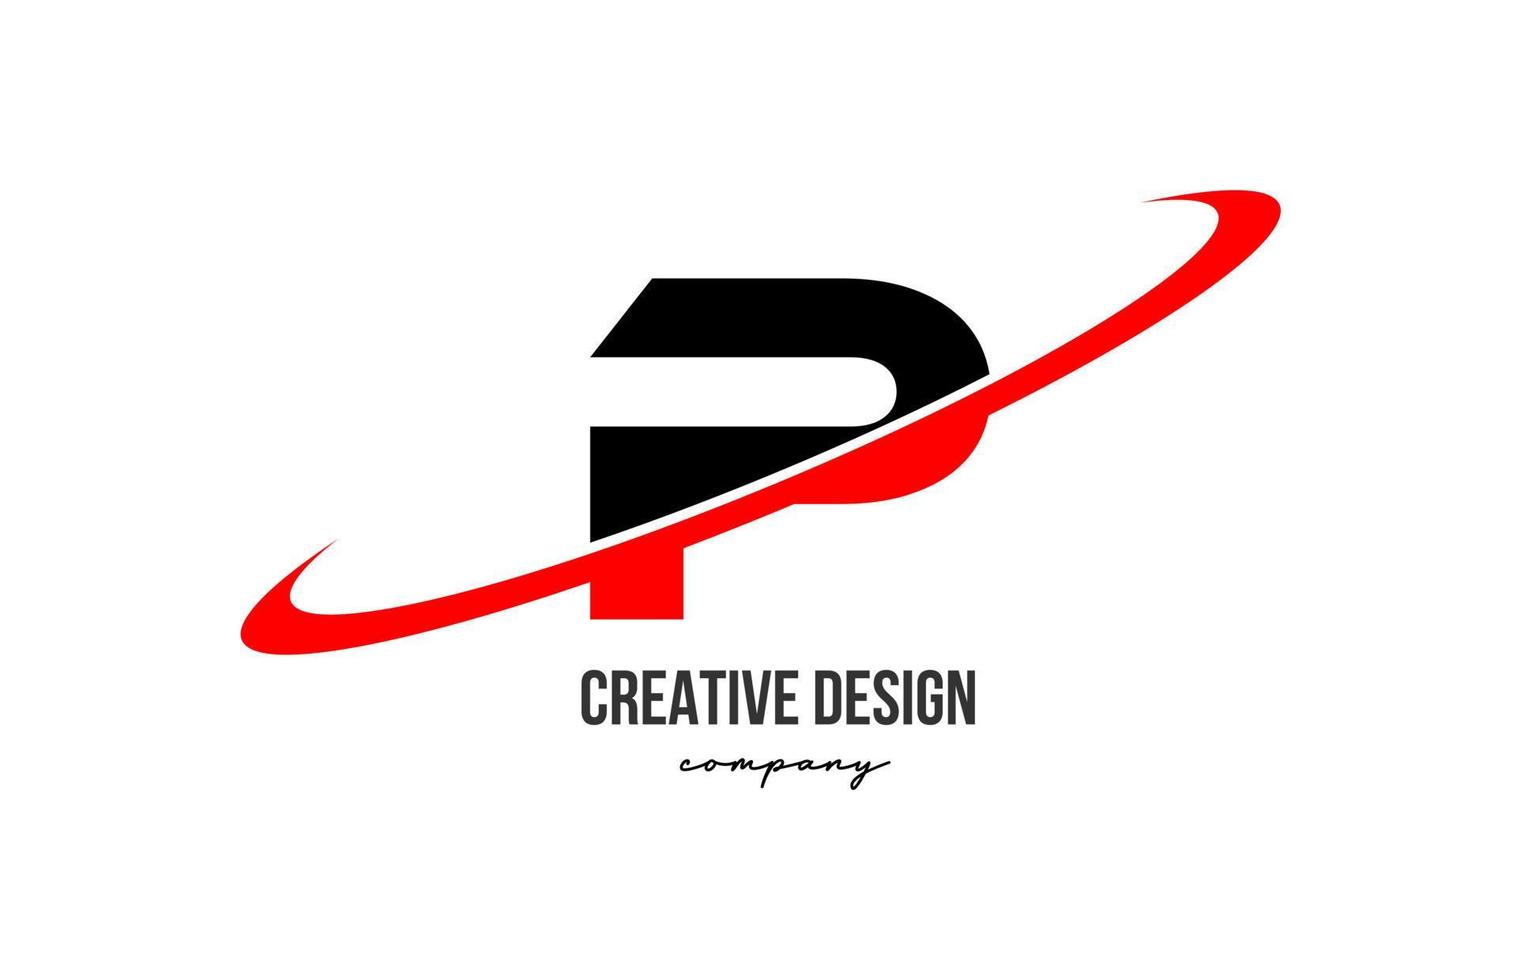 rojo negro pags alfabeto letra logo con grande silbido. corporativo creativo modelo diseño para negocio y empresa vector